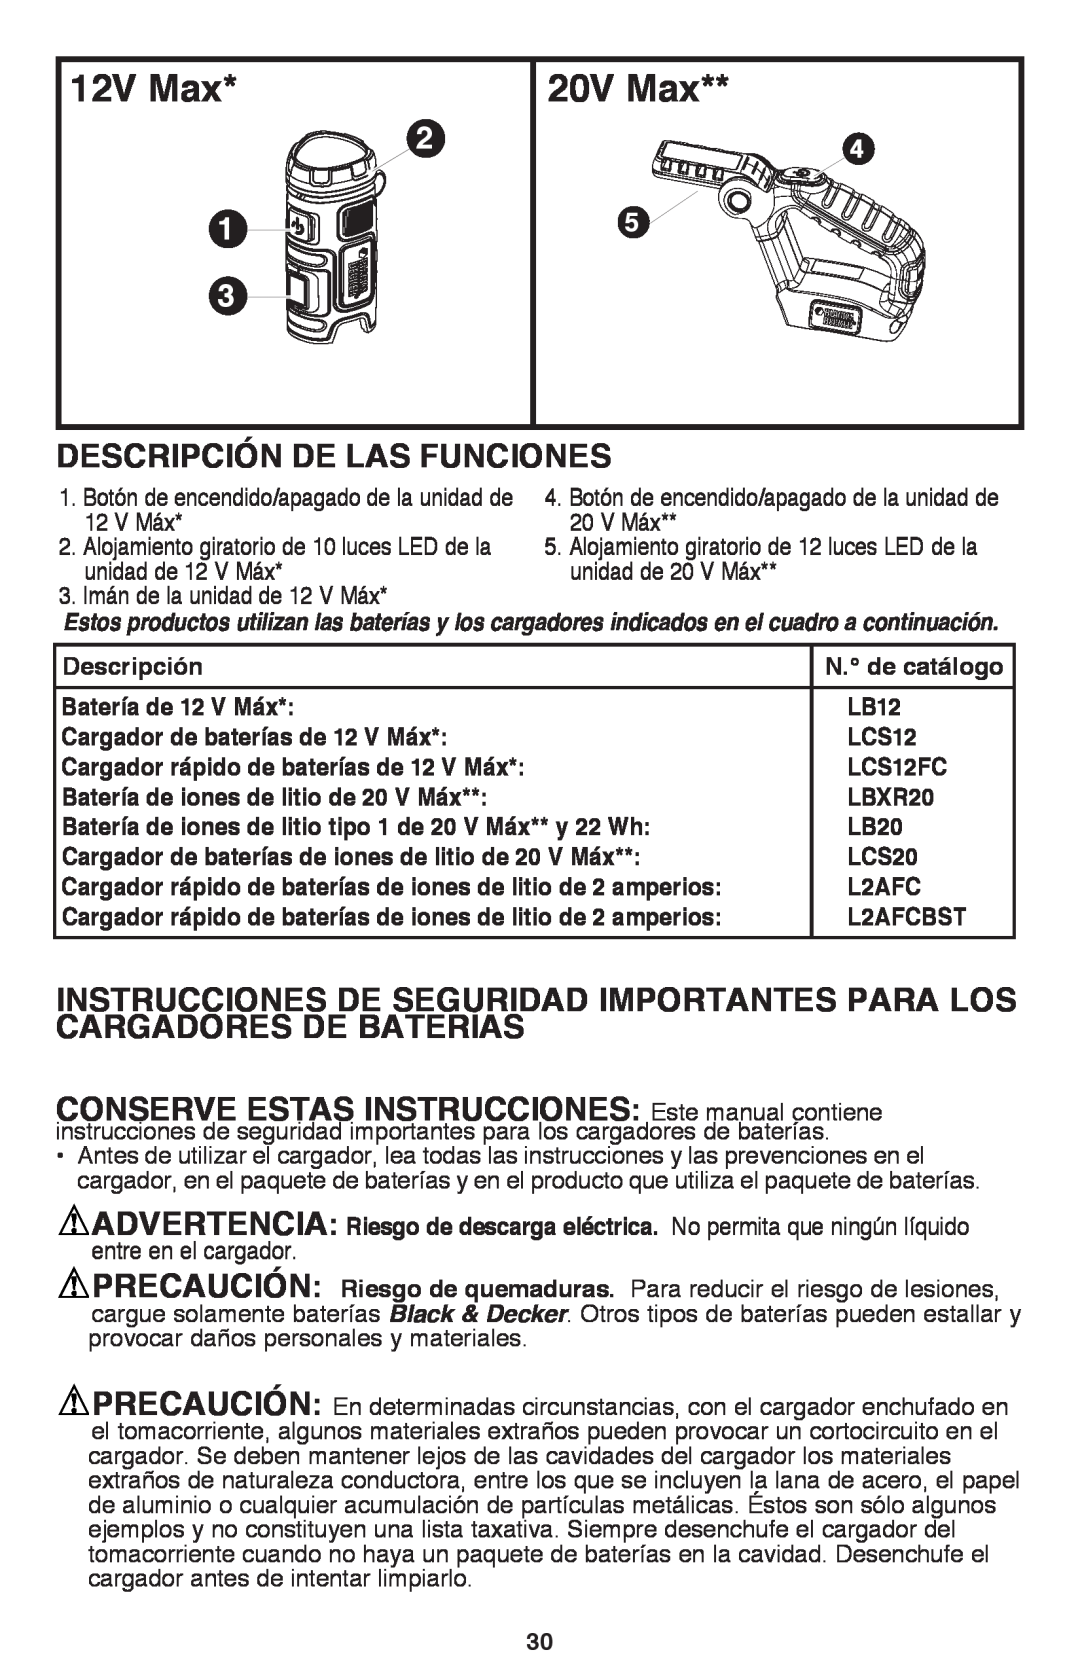 Black & Decker BDCF20, BDCF12 manual Descripción De Las Funciones, 12V Max, 20V Max 